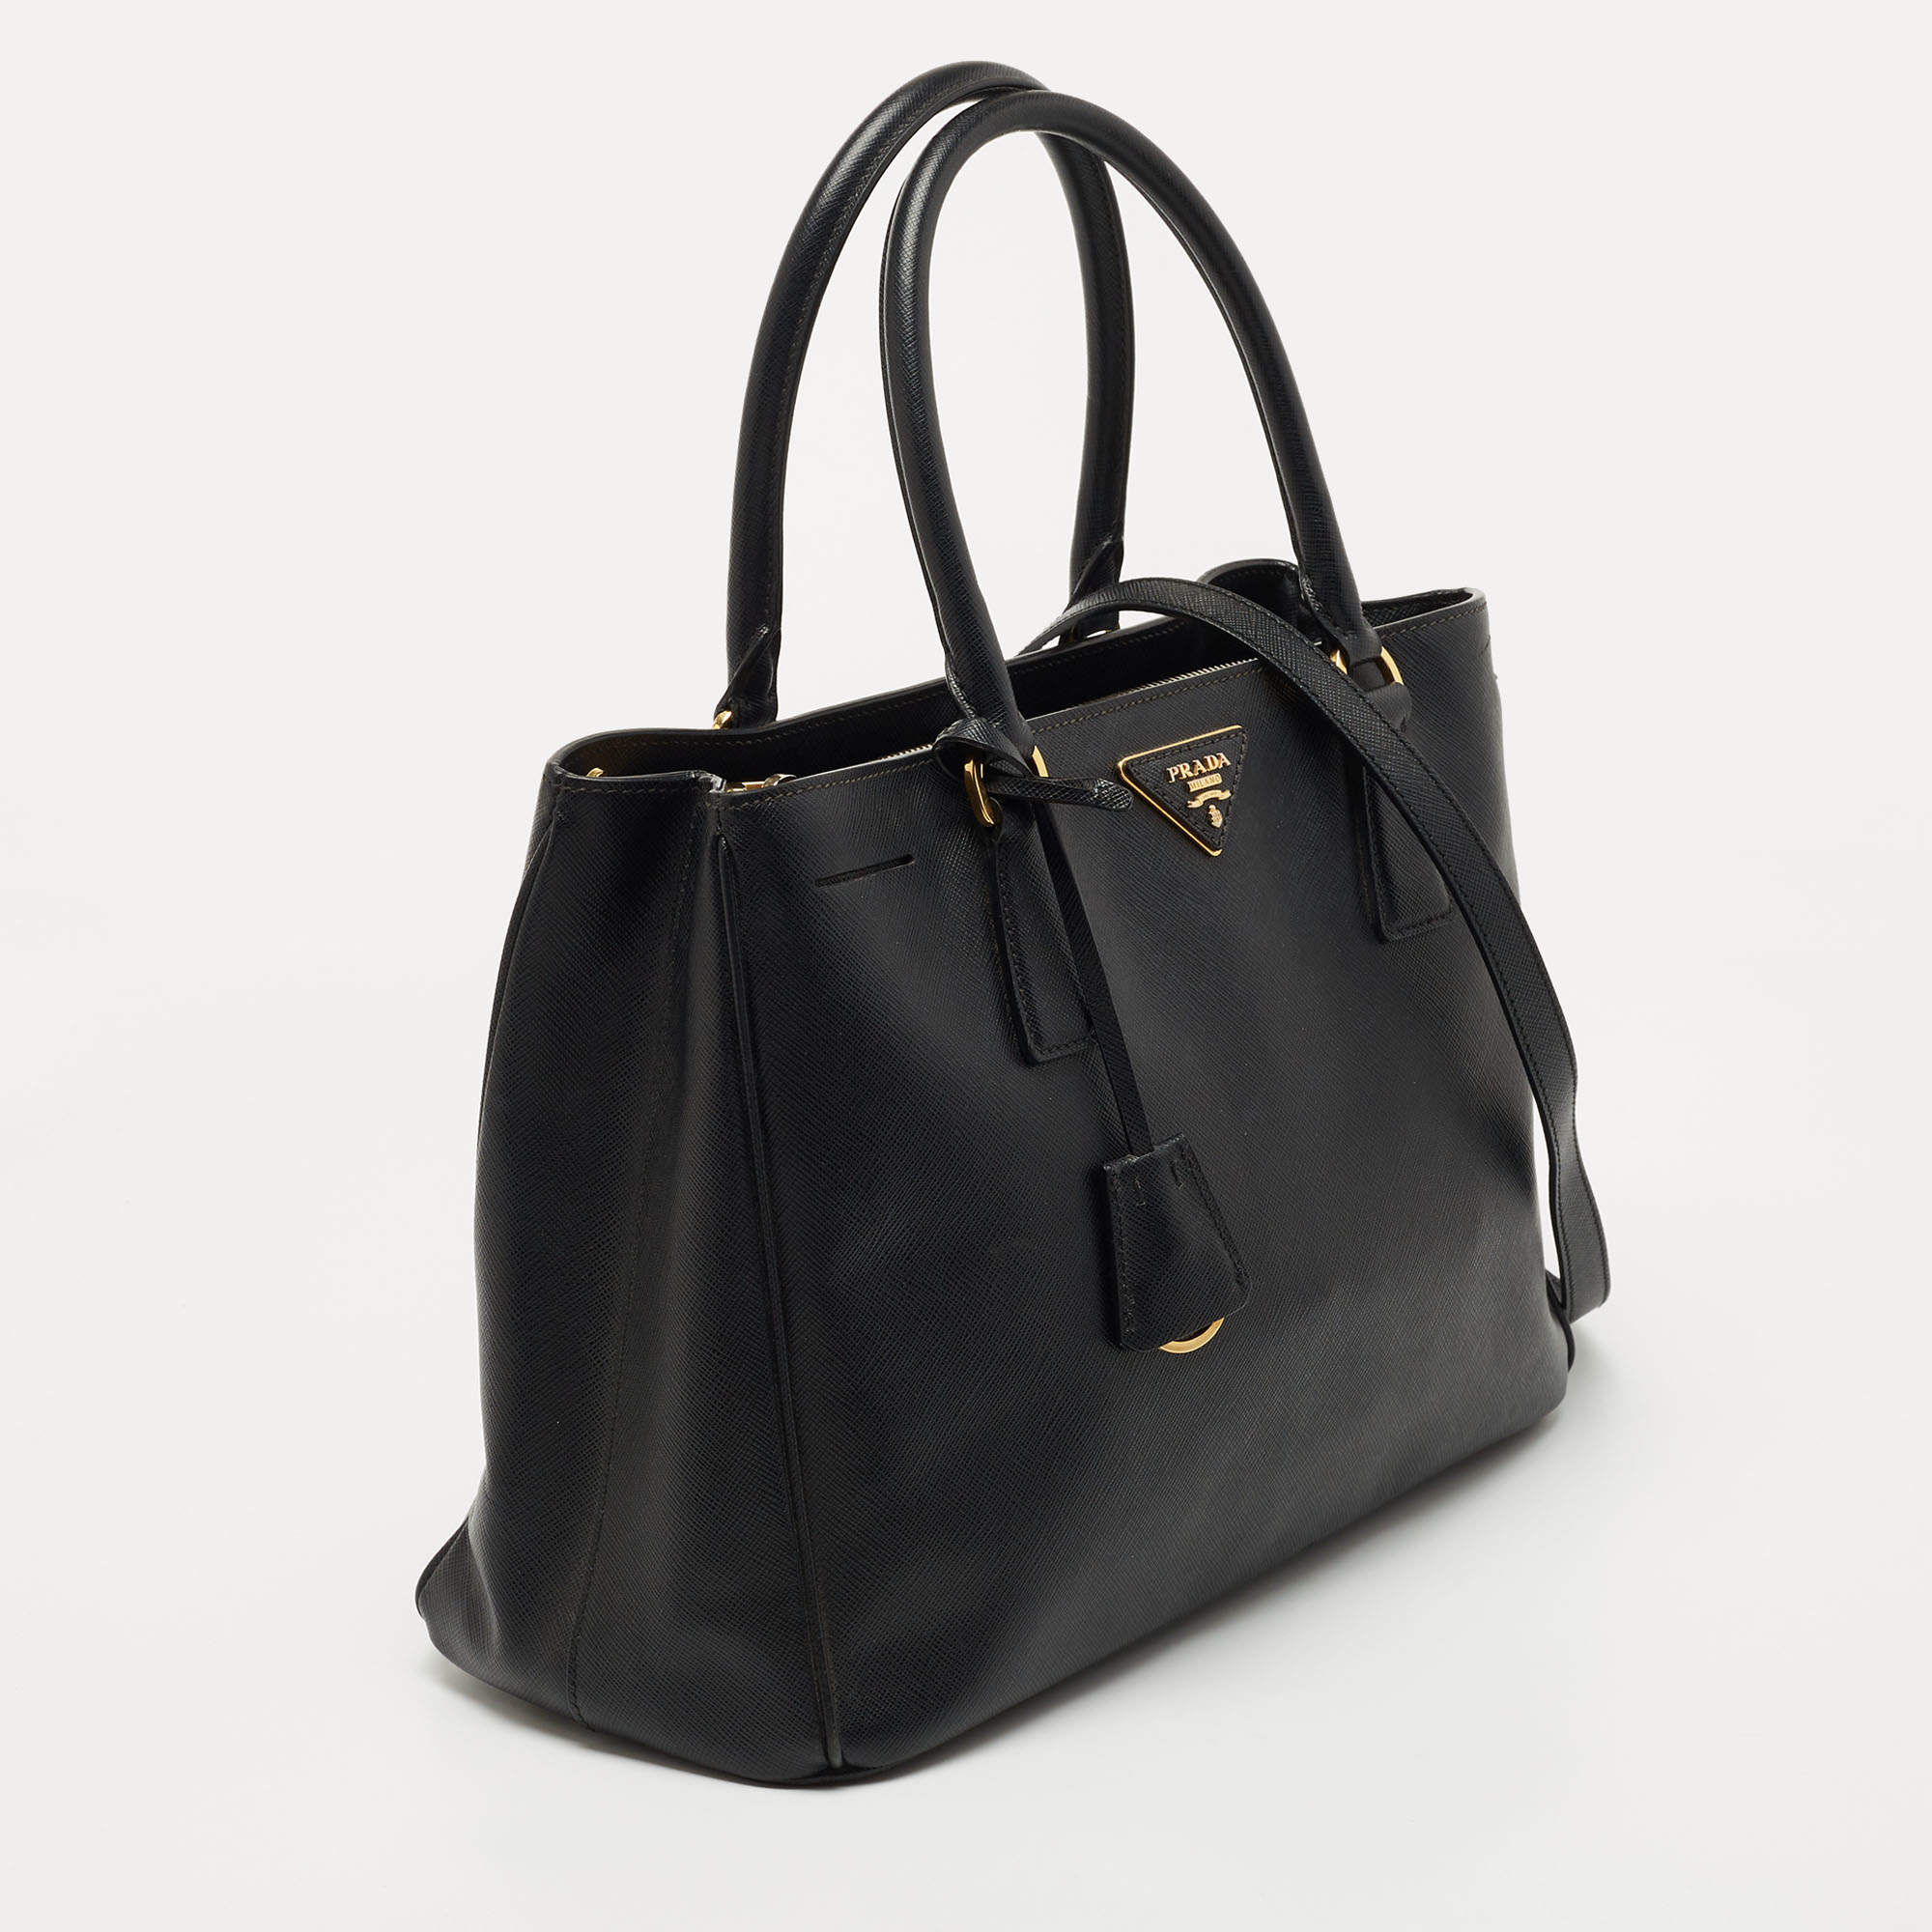 Prada Galleria Double Lux Black Saffiano Leather Zip Satchel – Coco  Approved Studio